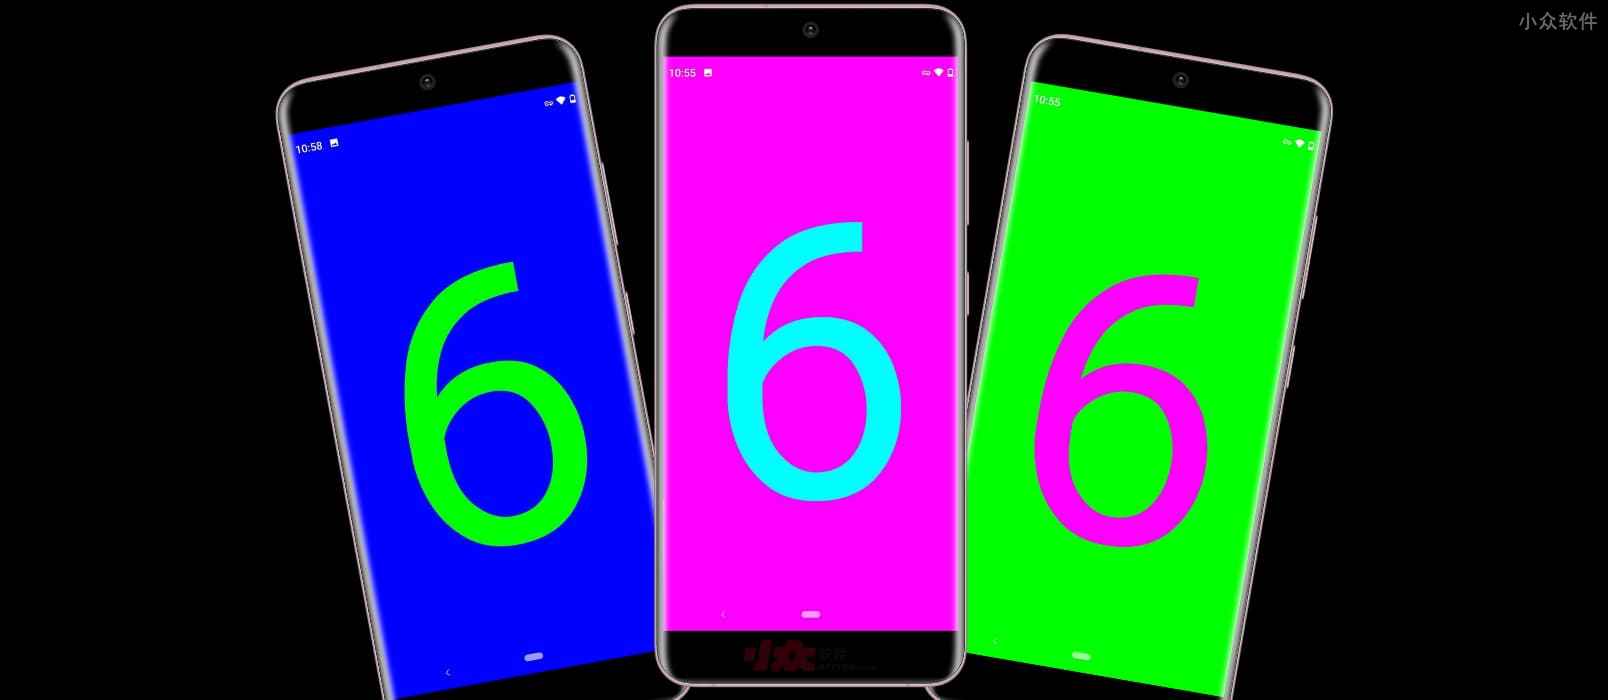 6 - Android 手机史上最 6 的应用